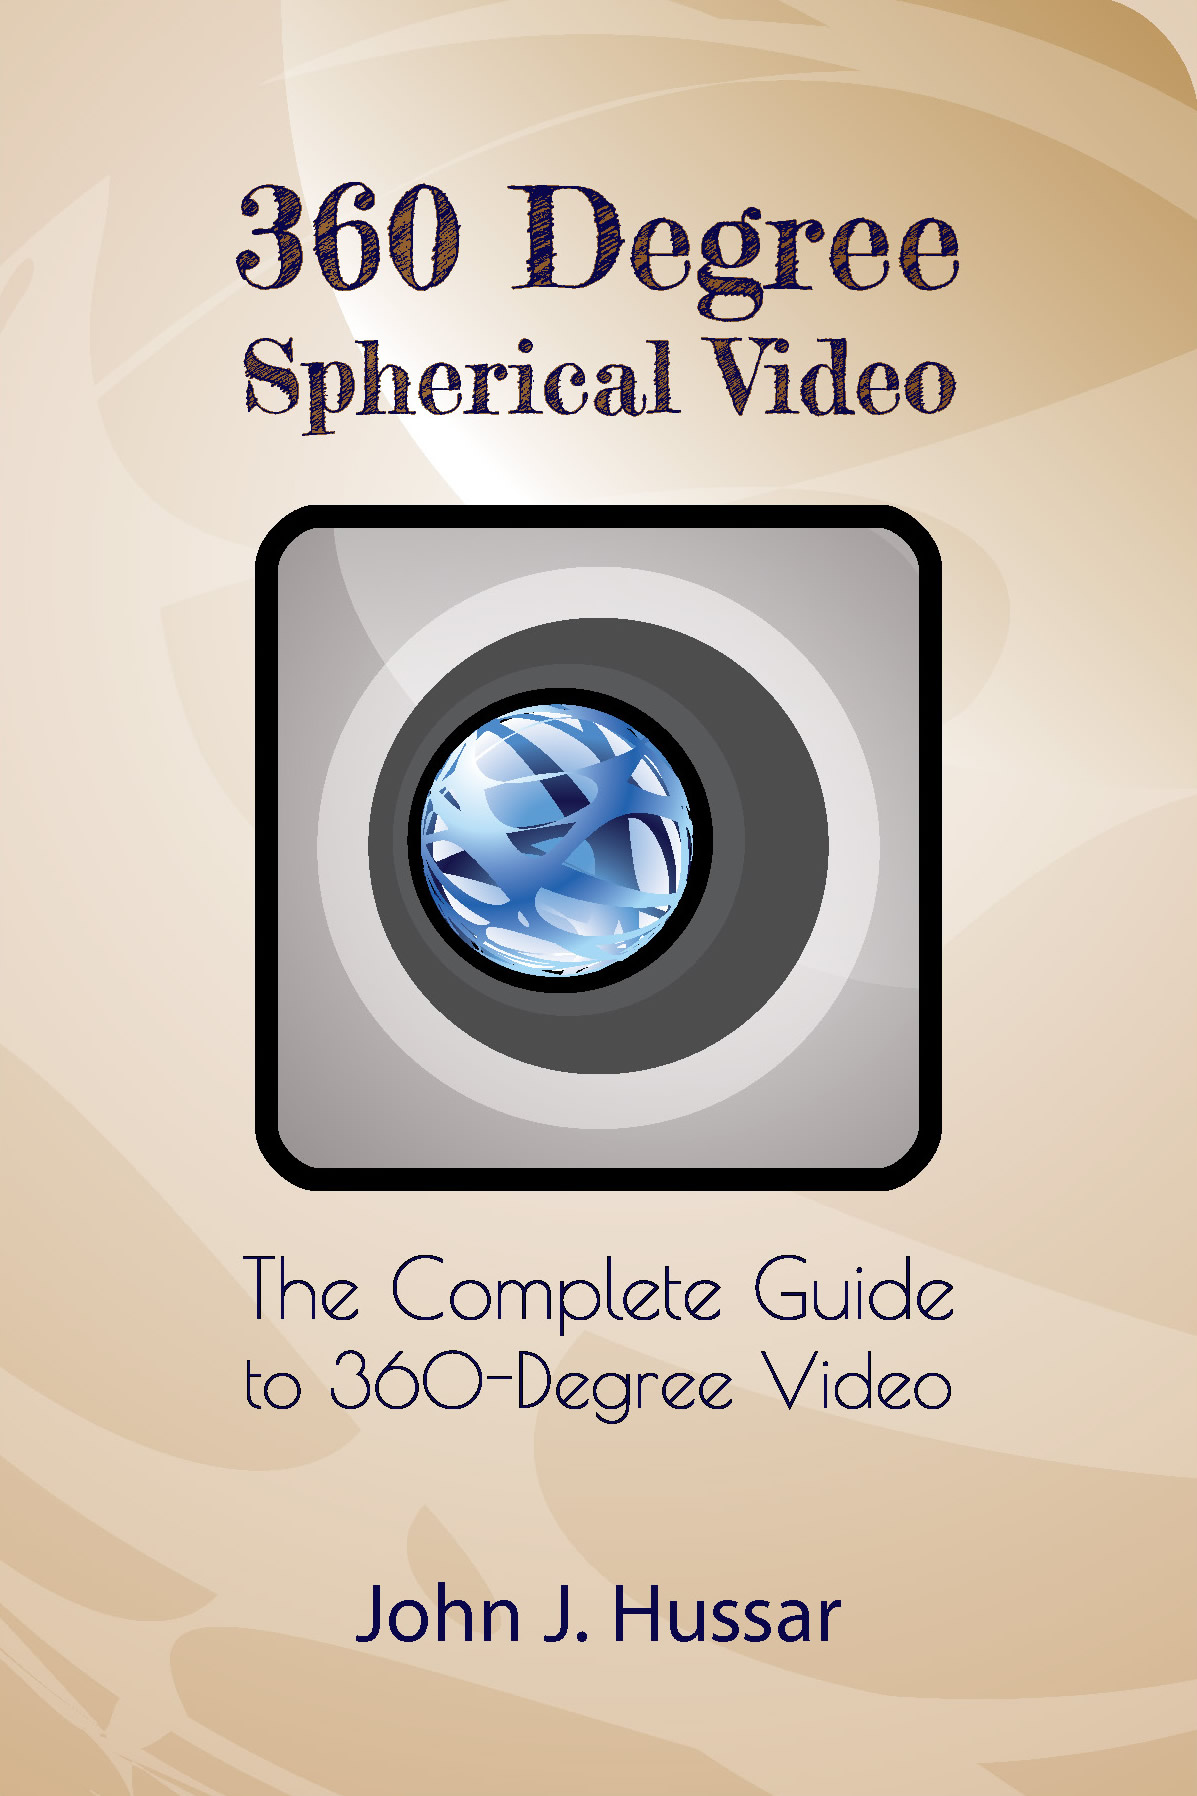 360-Degree Spherical Video